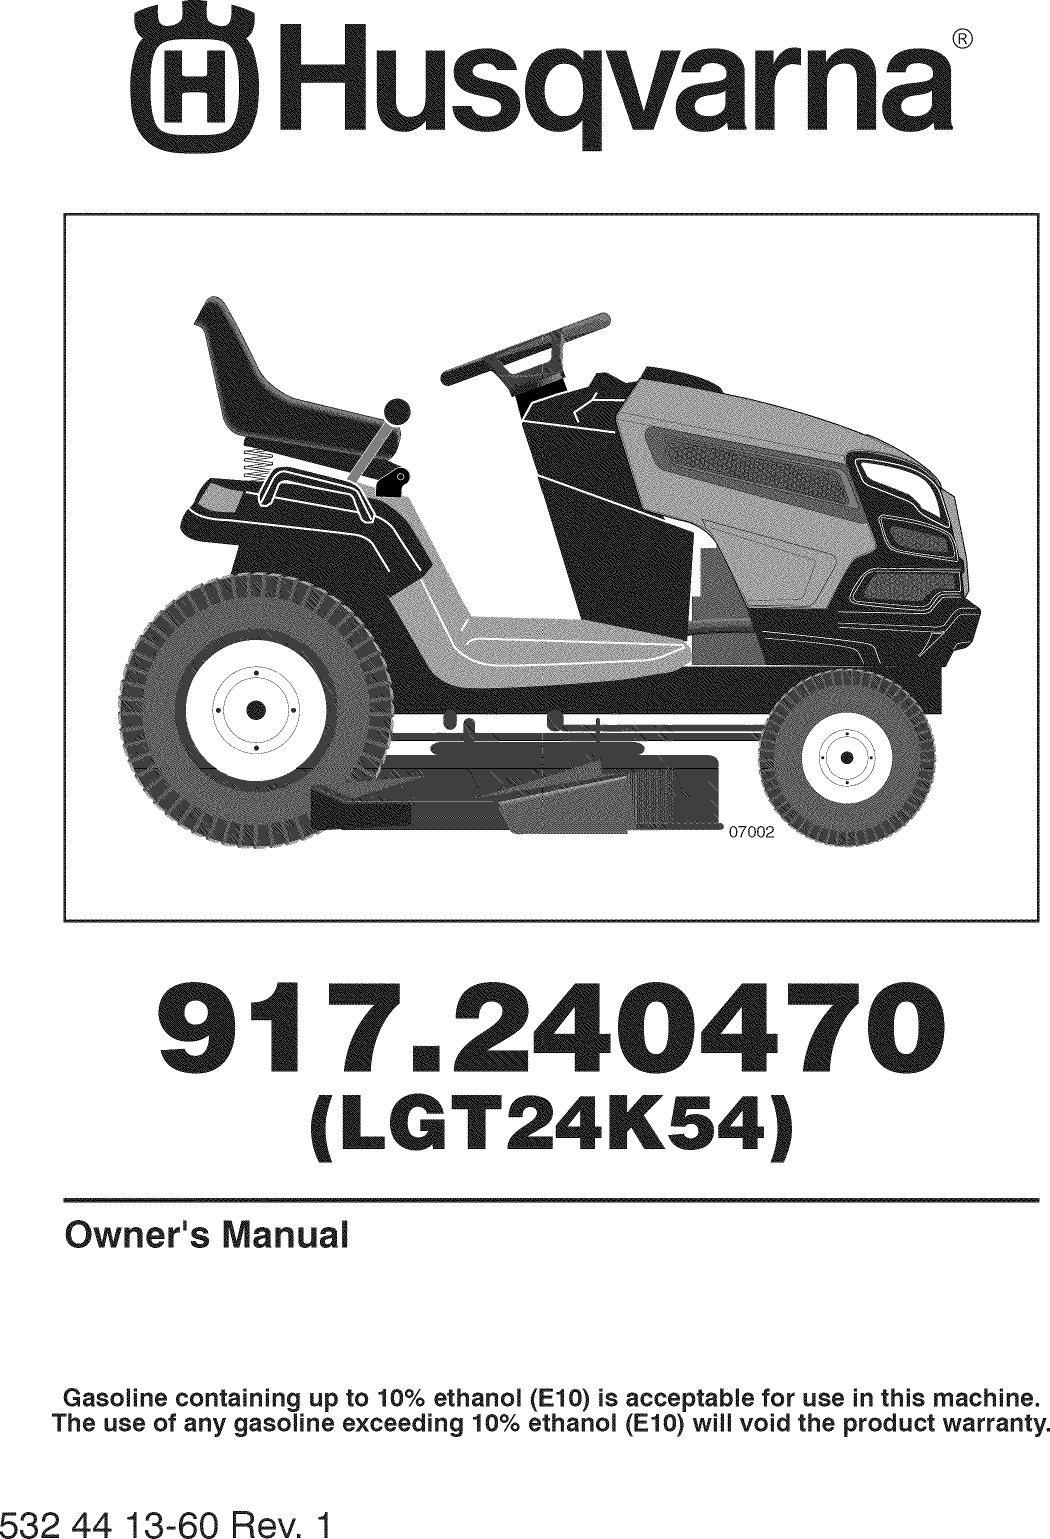 husqvarna lawn mower manual hu775h